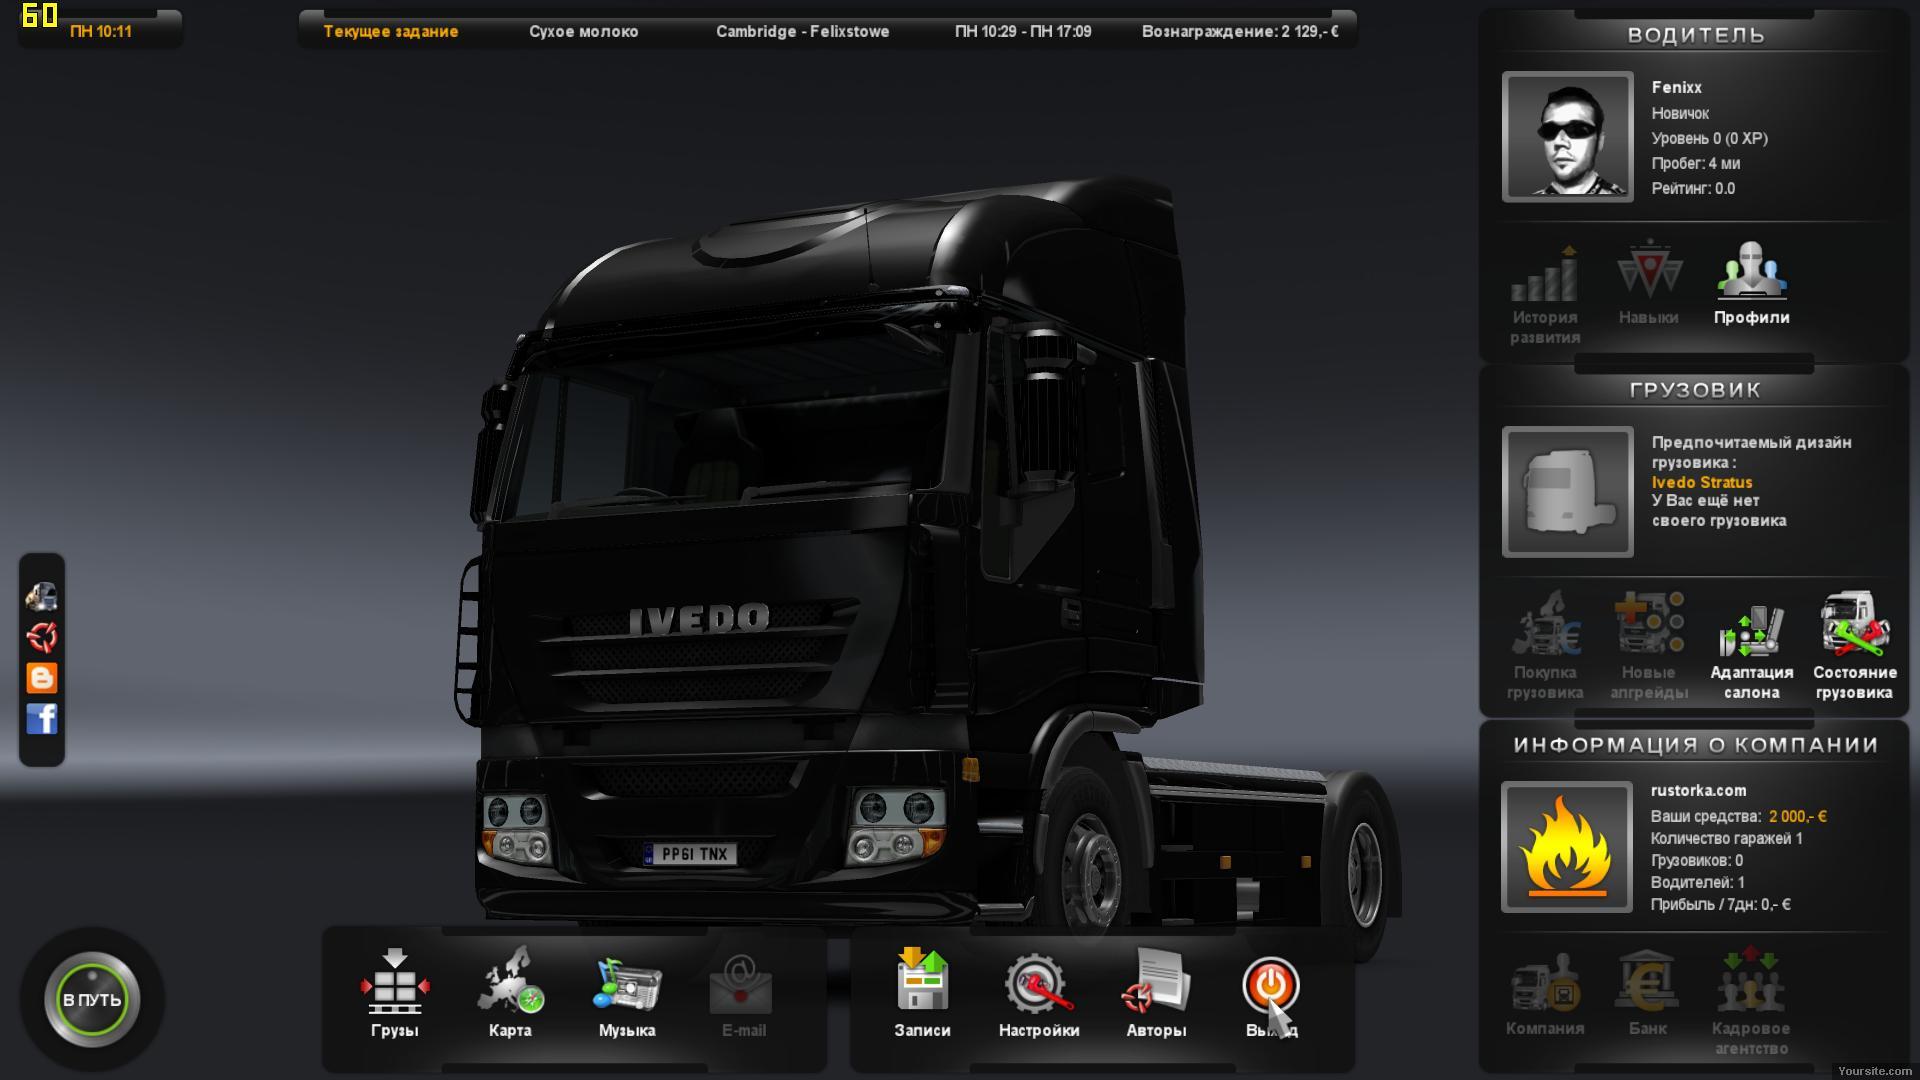 euro truck simulator 2 v 1.8 2.5 download torrent new version